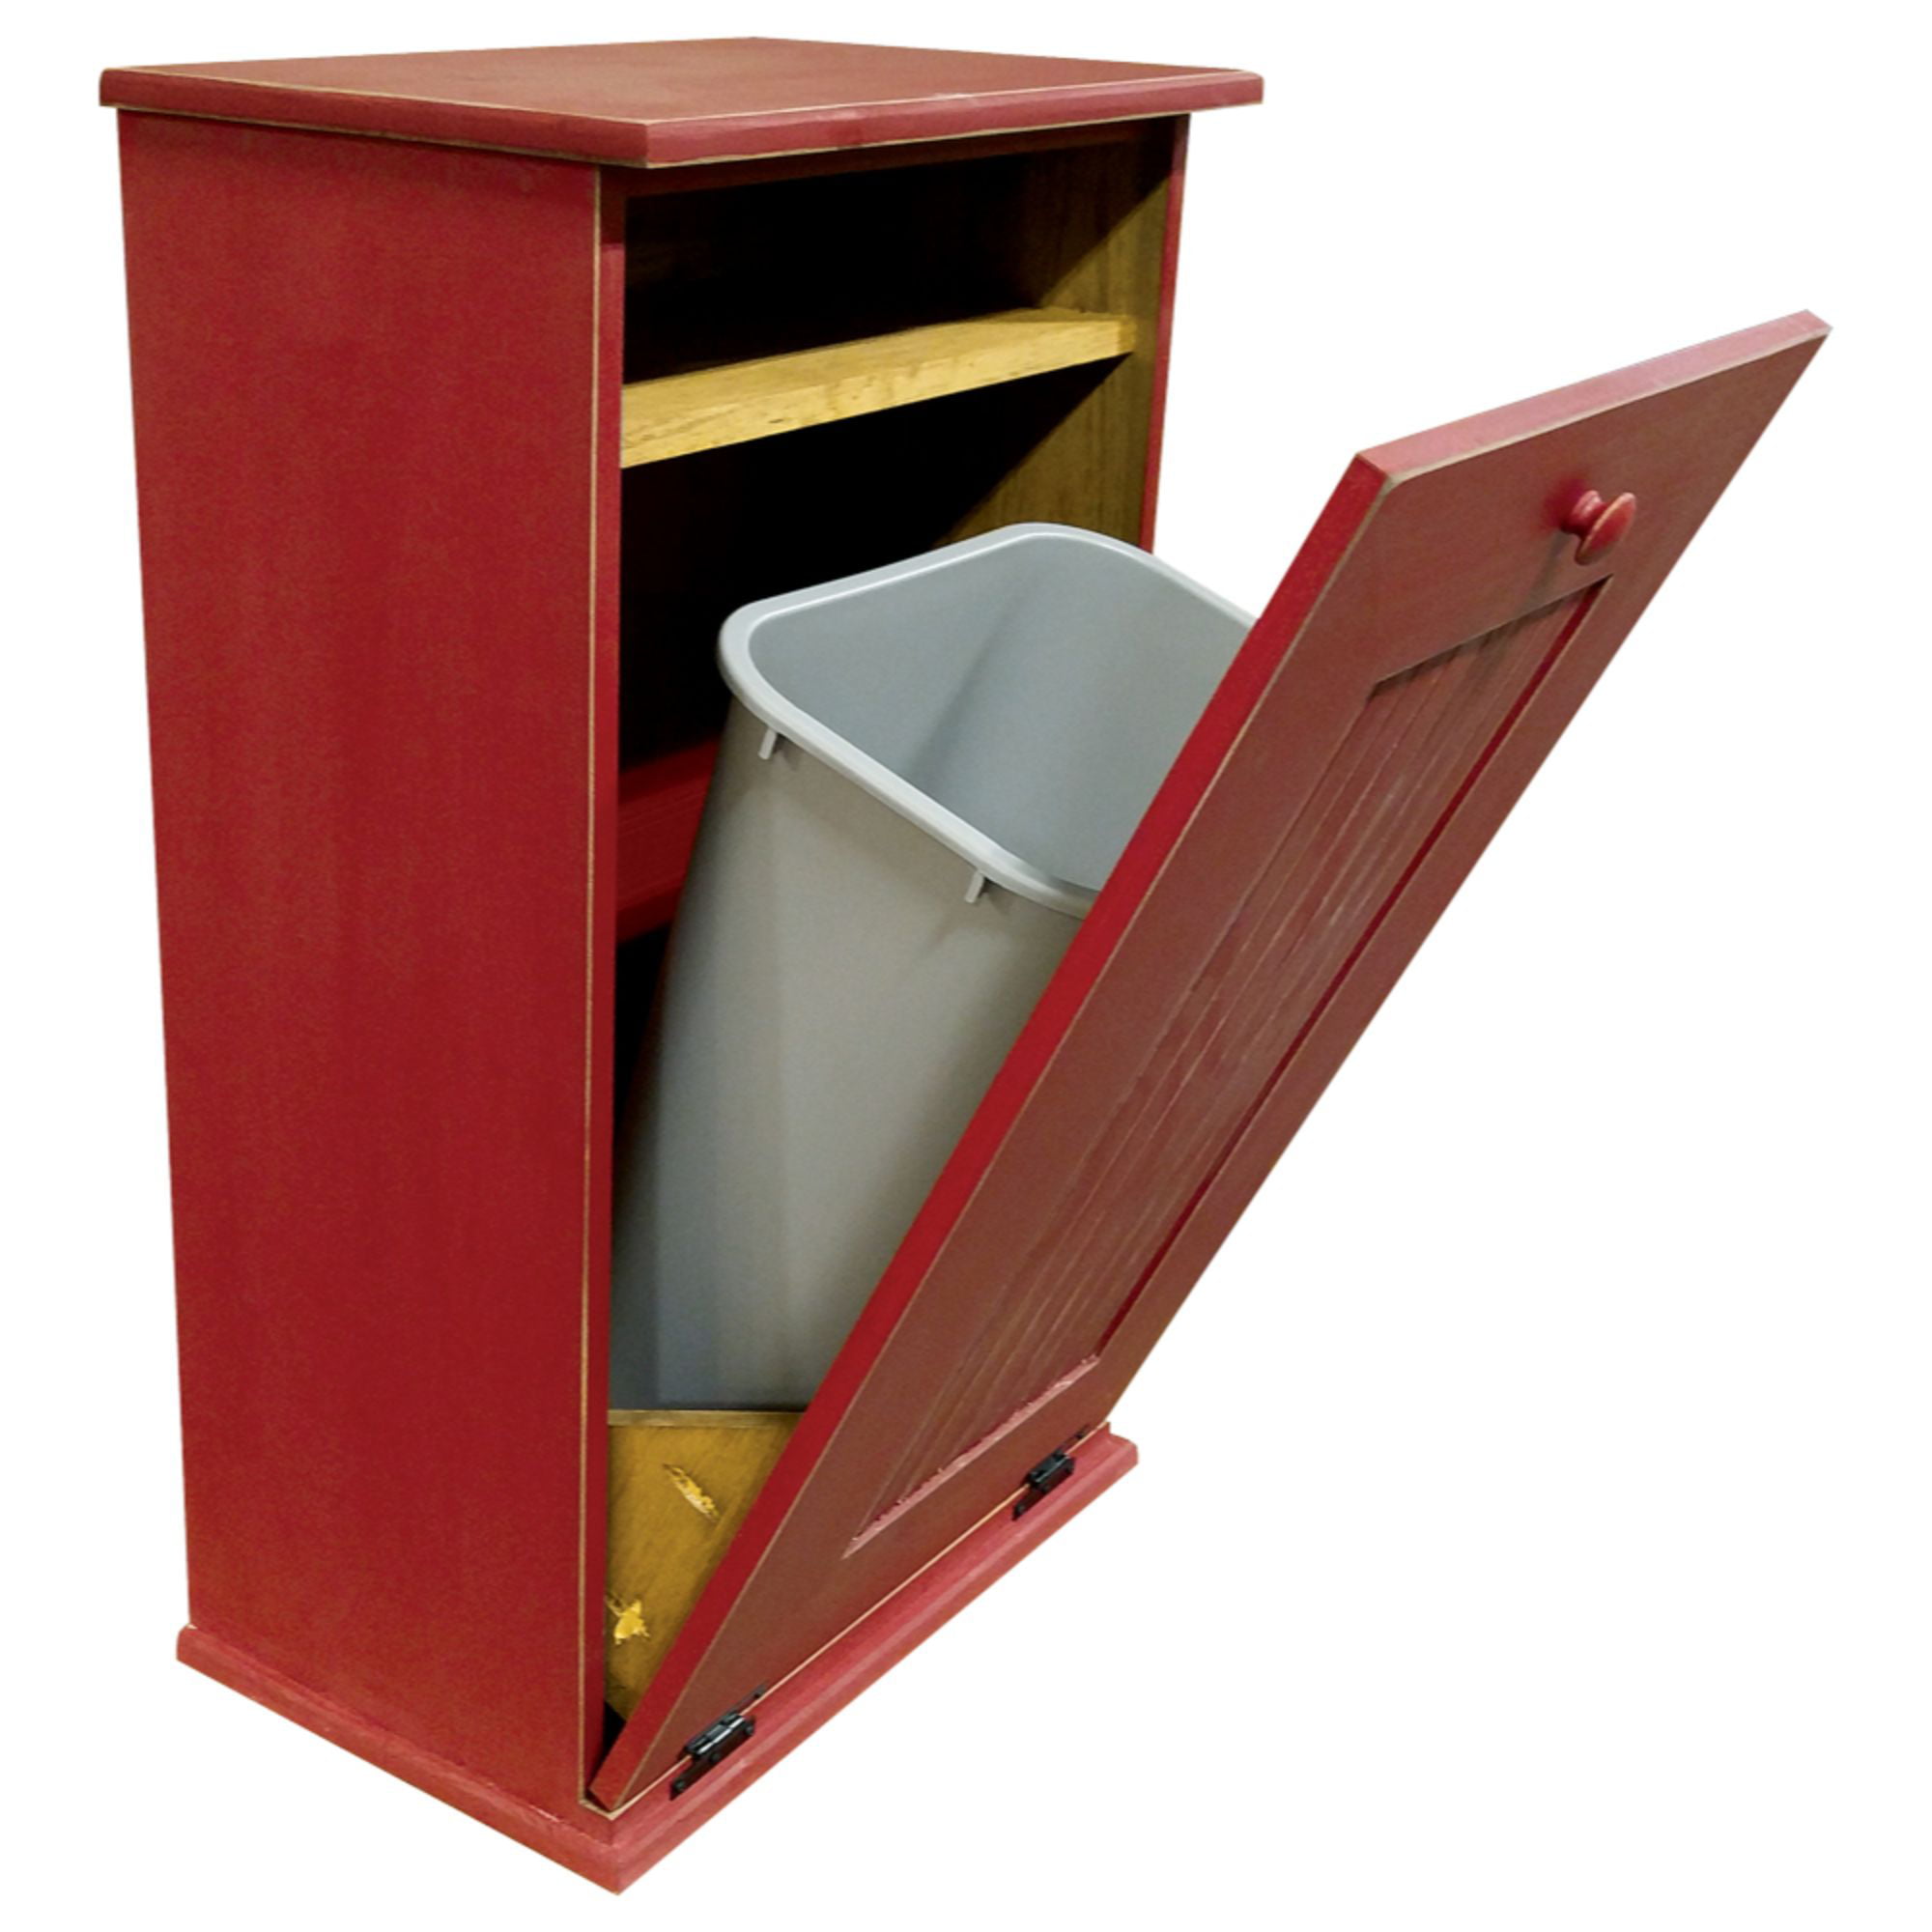 Luxury Stainless Steel Trash Bin Red Wood Pattern Metal Waste Bin for Trash  Bag Holder Trash Can Kitchen and Living-room 6L/10L - AliExpress